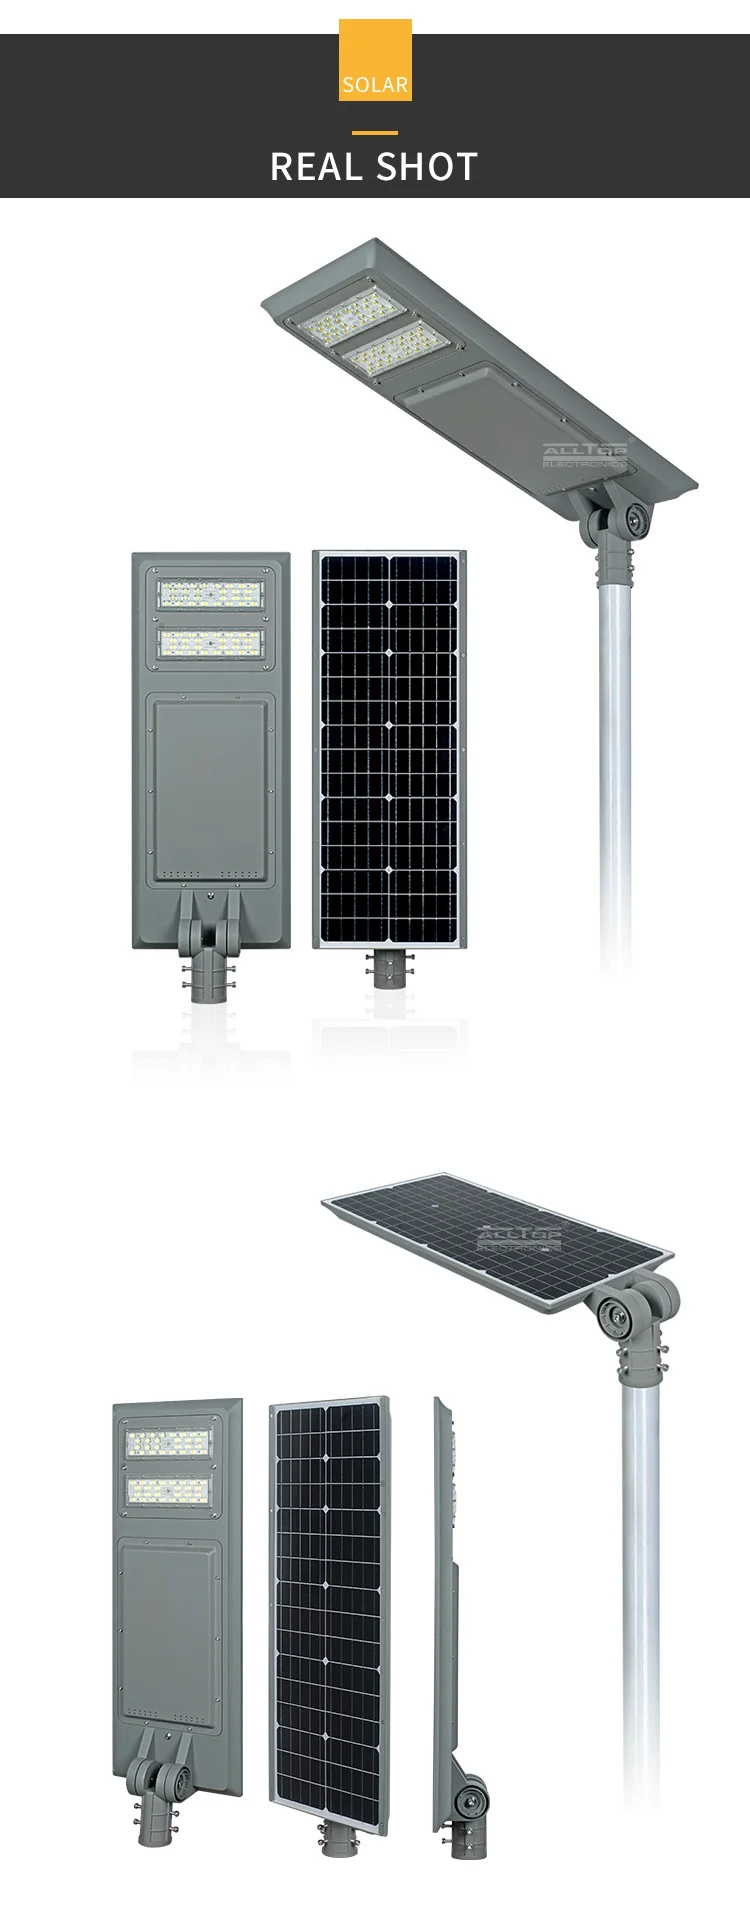 ALLTOP Outdoor Adjustable angle 30w 40w 60w integrated aluminum led solar street light